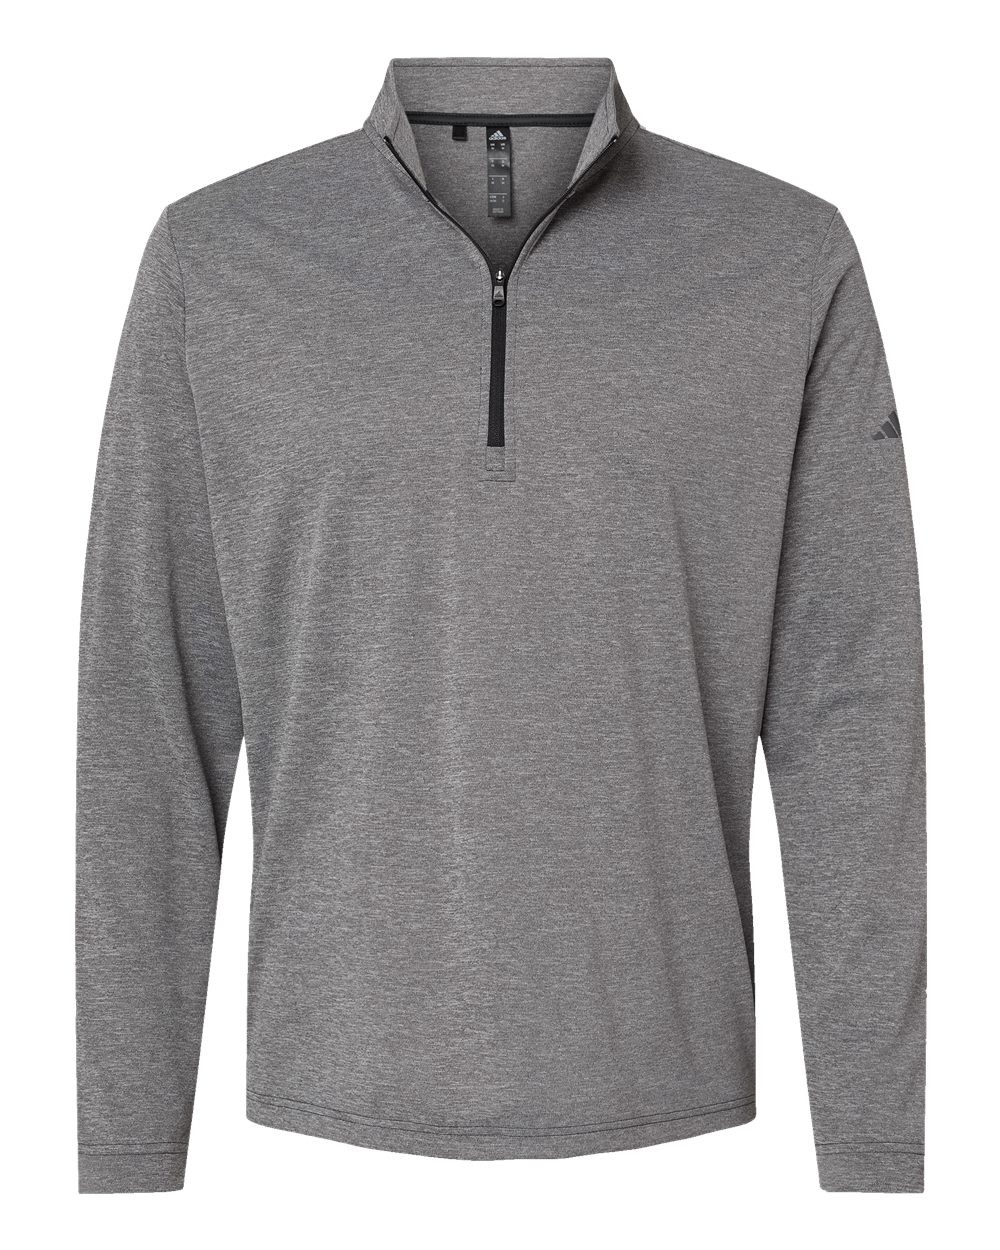 Adidas Mens Lightweight Quarter-Zip Pullover Shirt polyester A401 up to